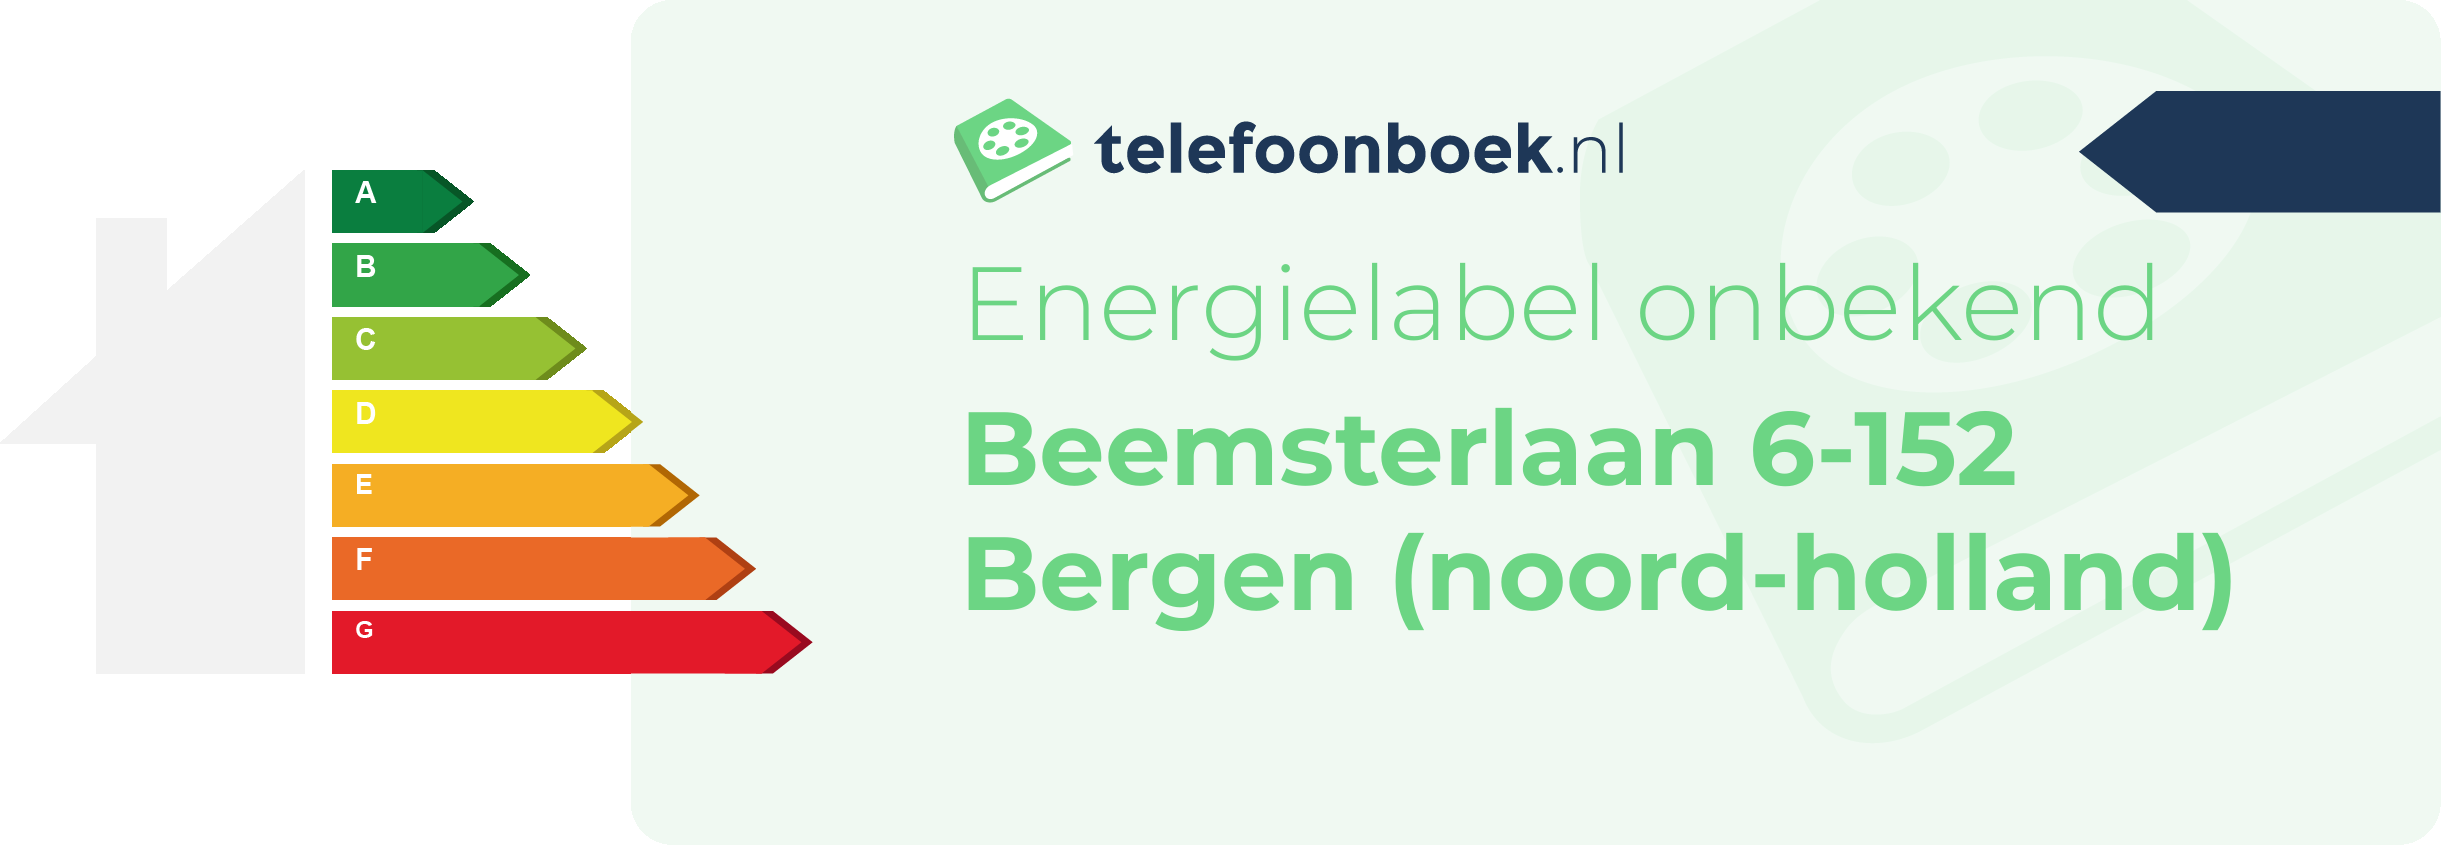 Energielabel Beemsterlaan 6-152 Bergen (Noord-Holland)